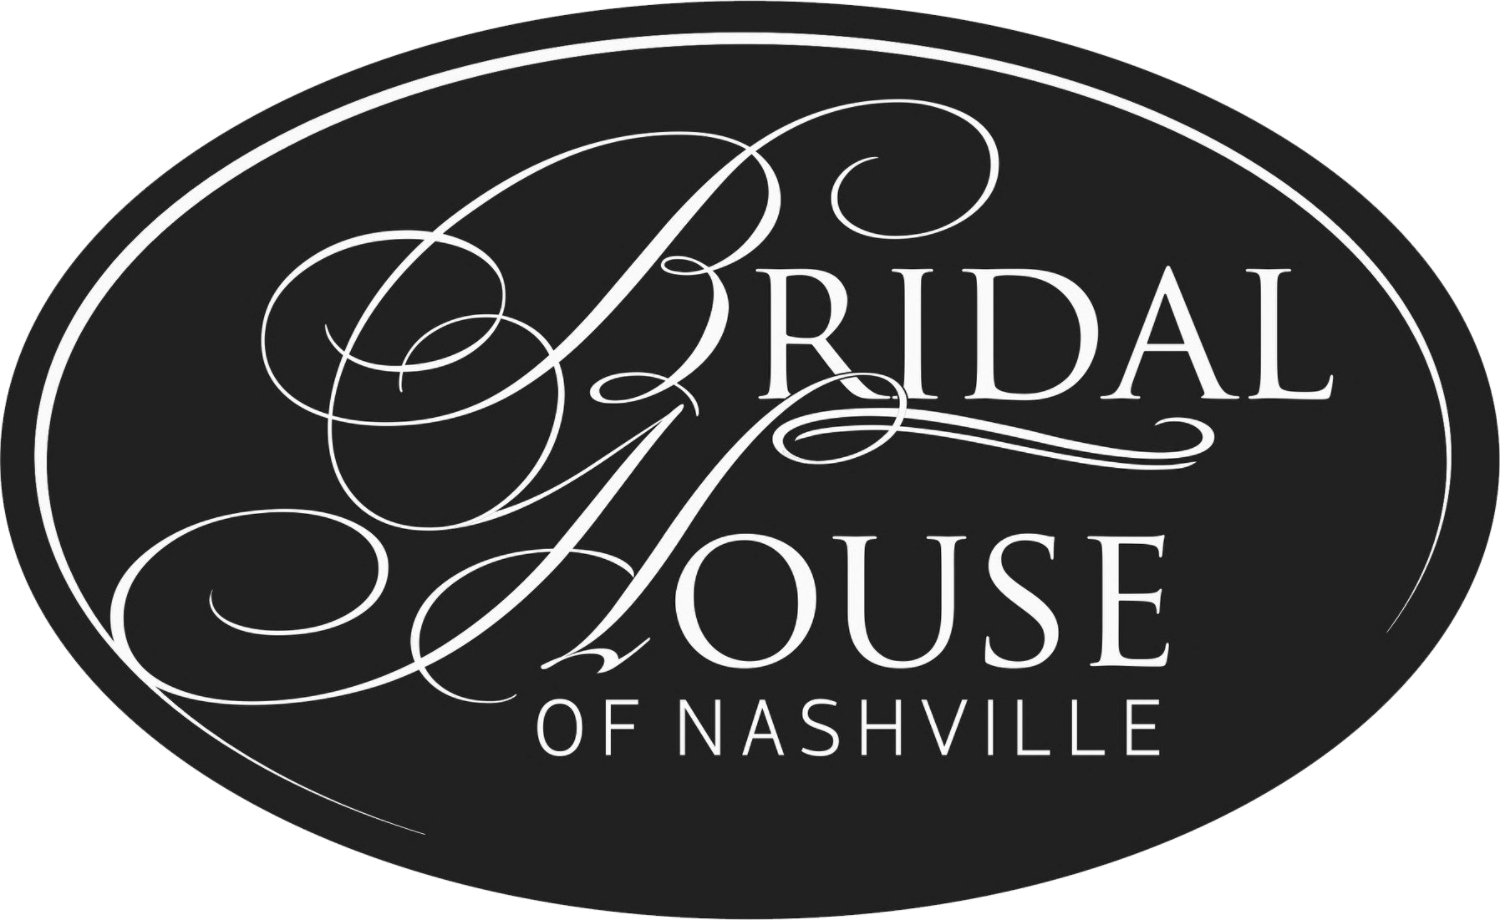 Bridal House of Nashville